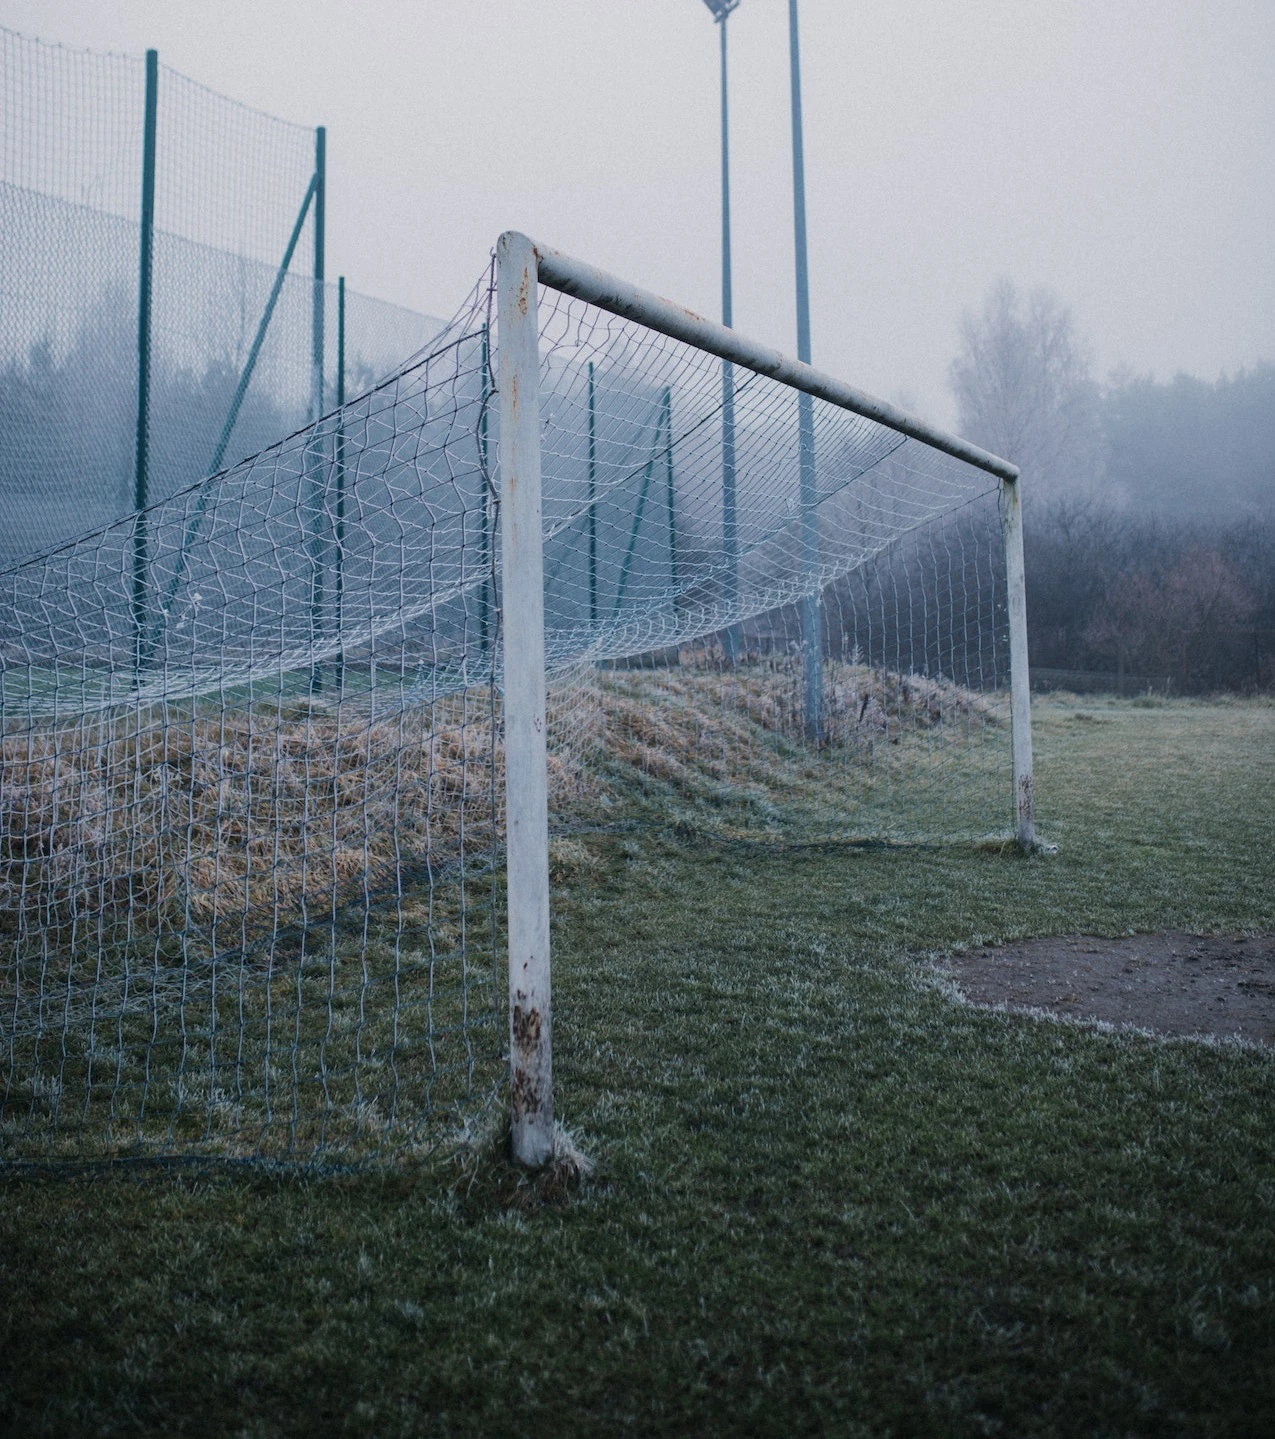 Goalposts on a local football pitch